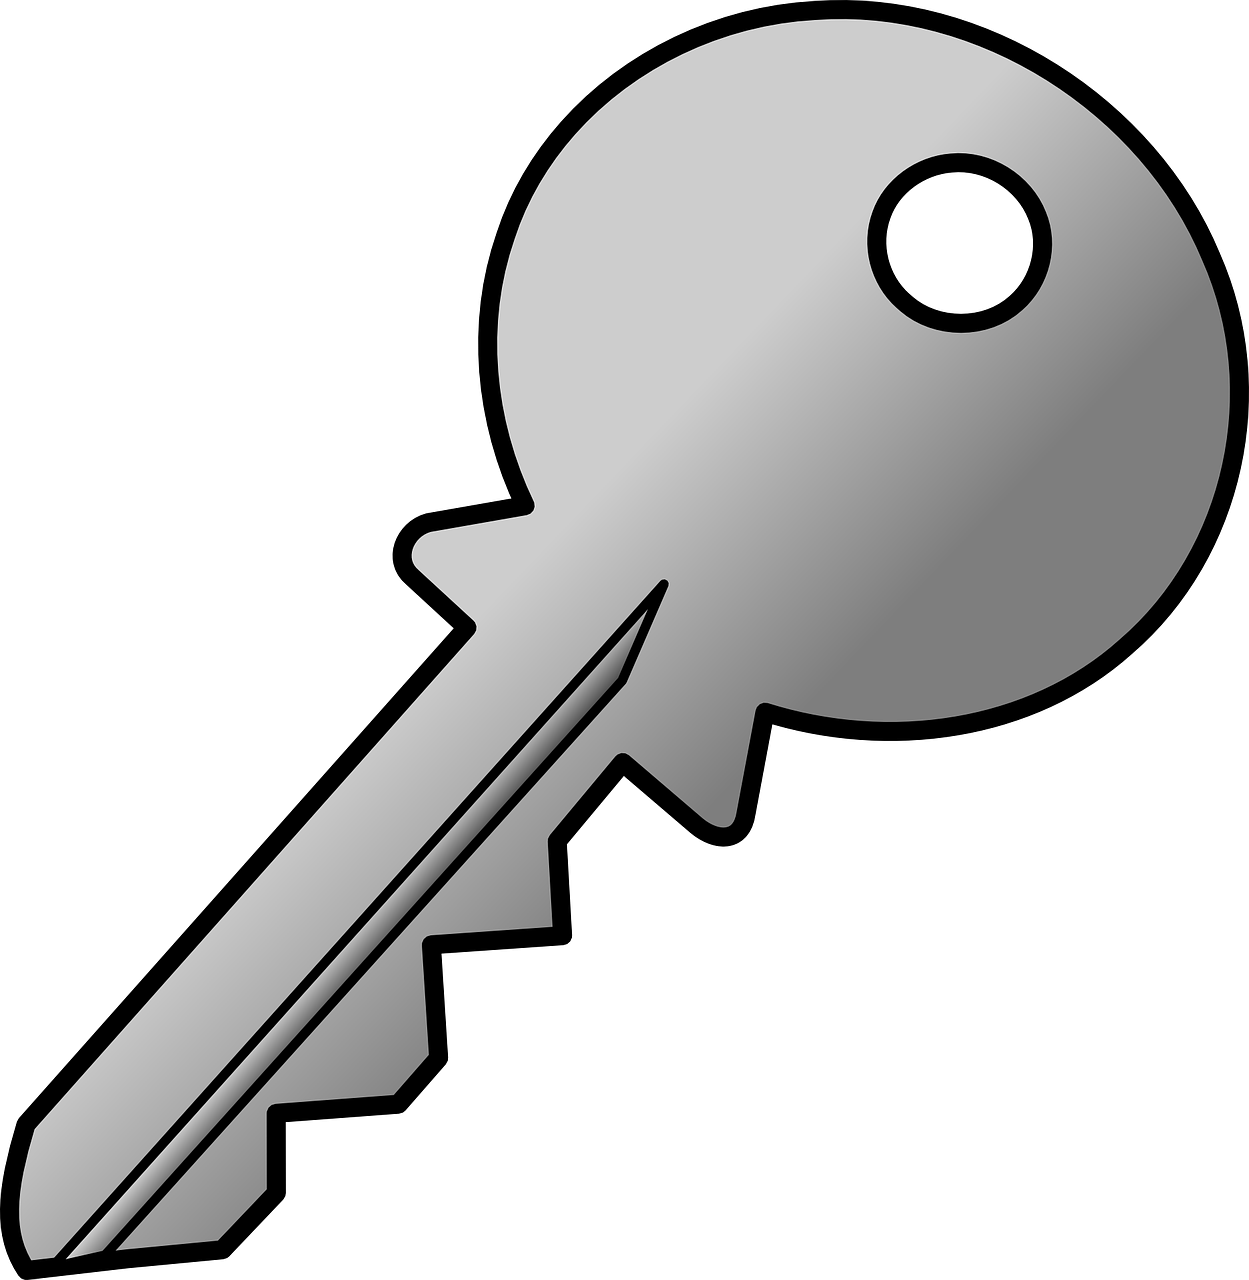 Keys picture. Ключ. Изображение ключа. Ключ нарисованный. Ключ вектор.